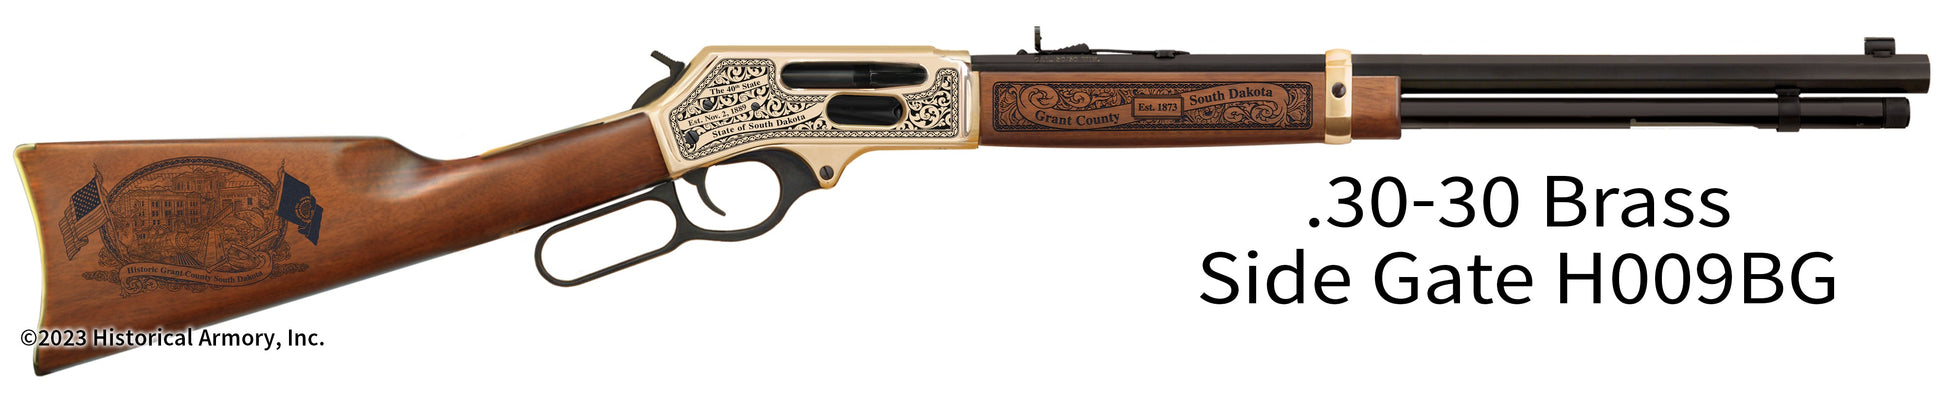 Grant County South Dakota Engraved Henry .30-30 Brass Side Gate Rifle